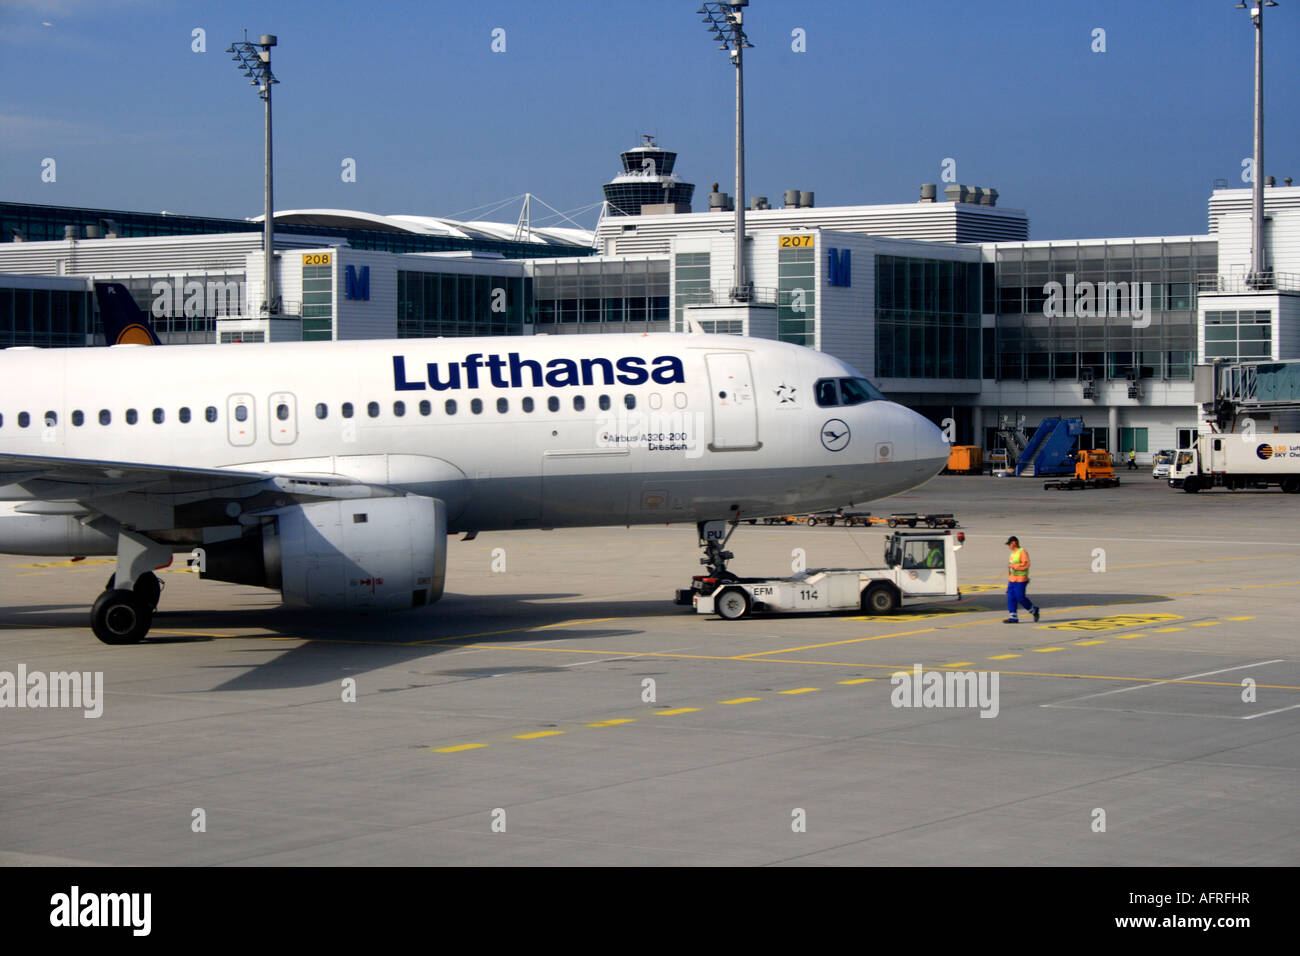 Lufthansa plane at Terminal 2 at Munich airport, Bavaria, Germany, Europe. Photo by Willy Matheisl Stock Photo